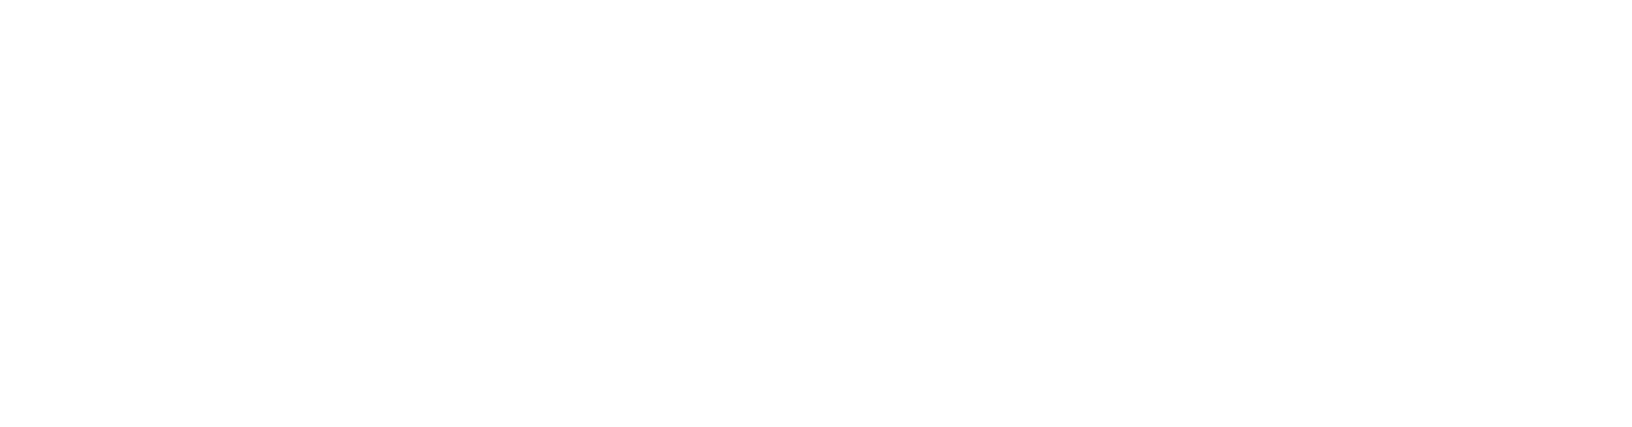 Olectra Greentech logo large for dark backgrounds (transparent PNG)